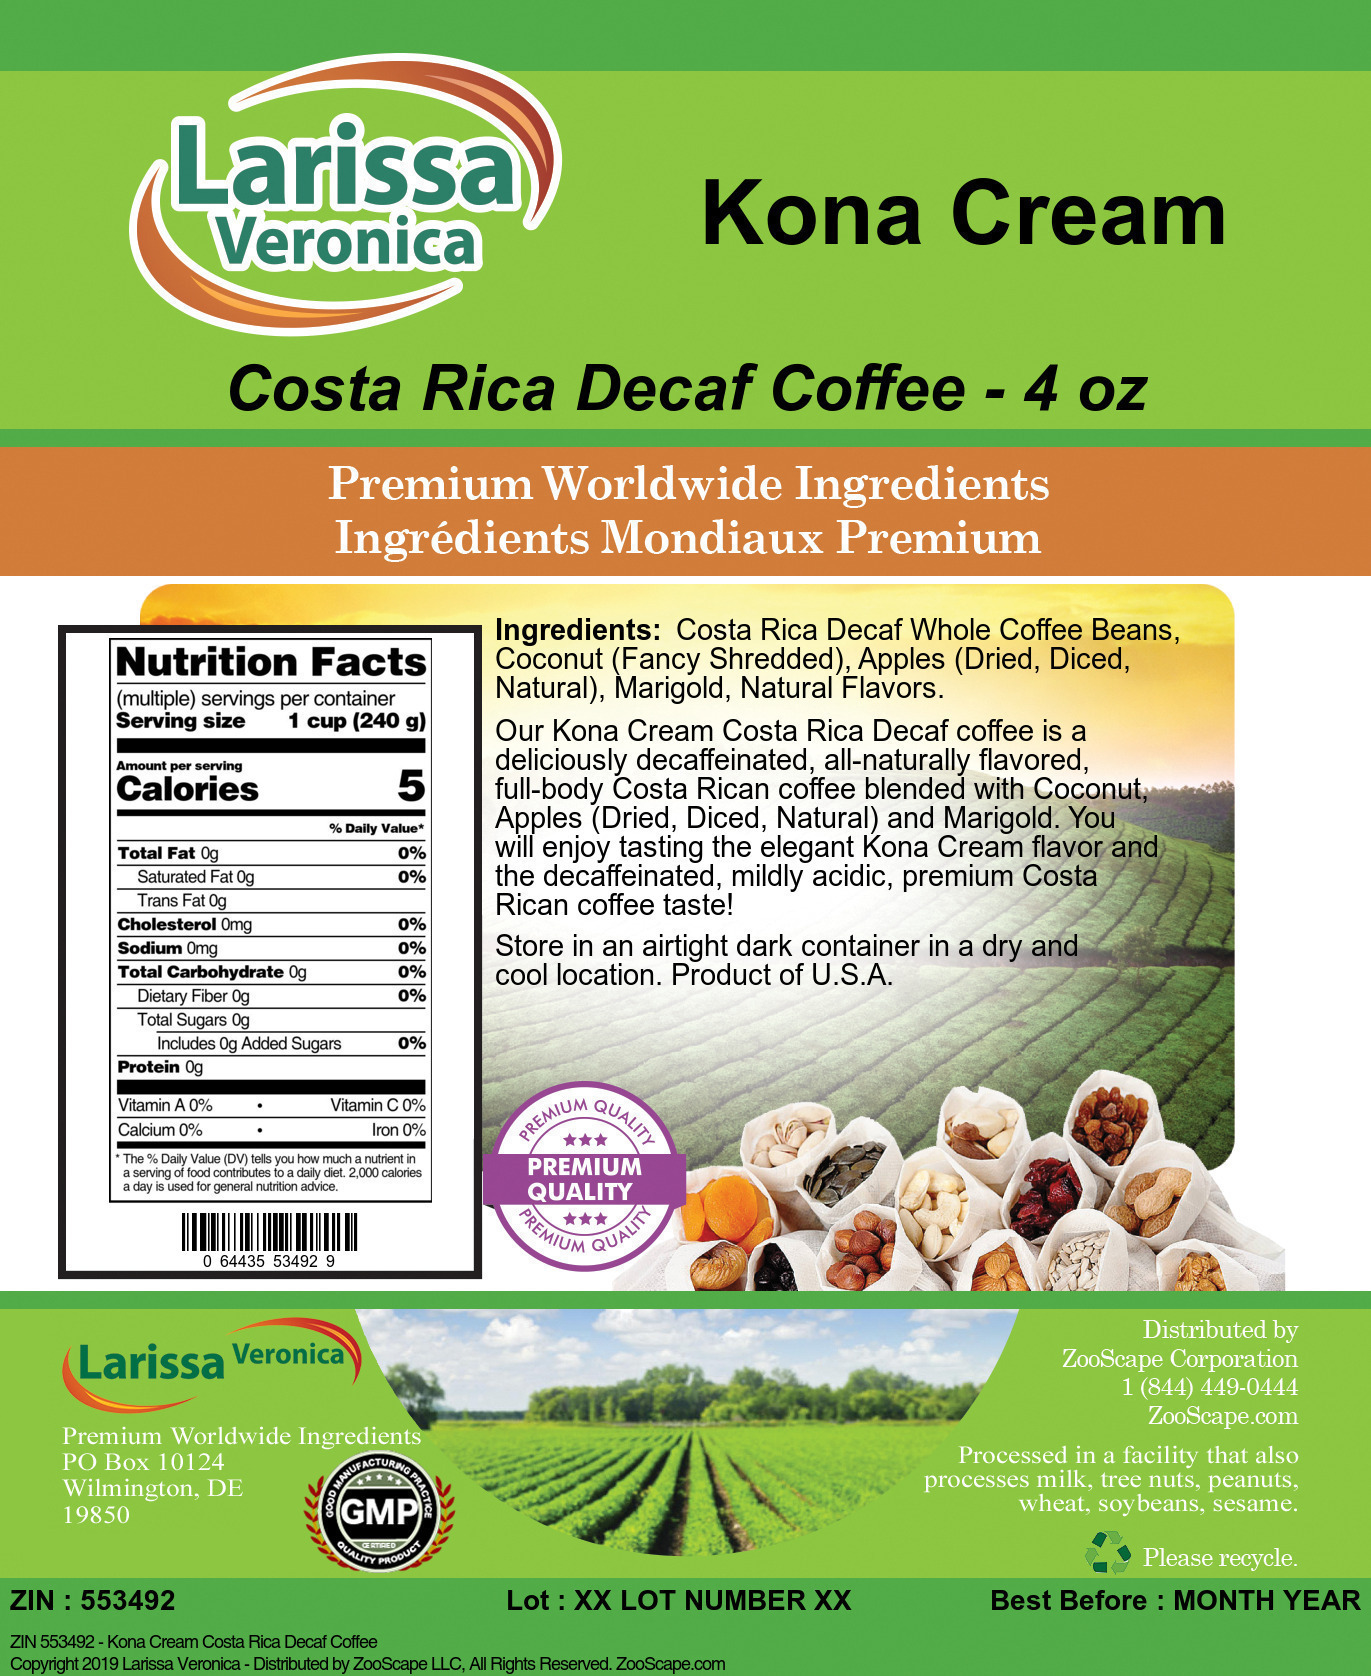 Kona Cream Costa Rica Decaf Coffee - Label